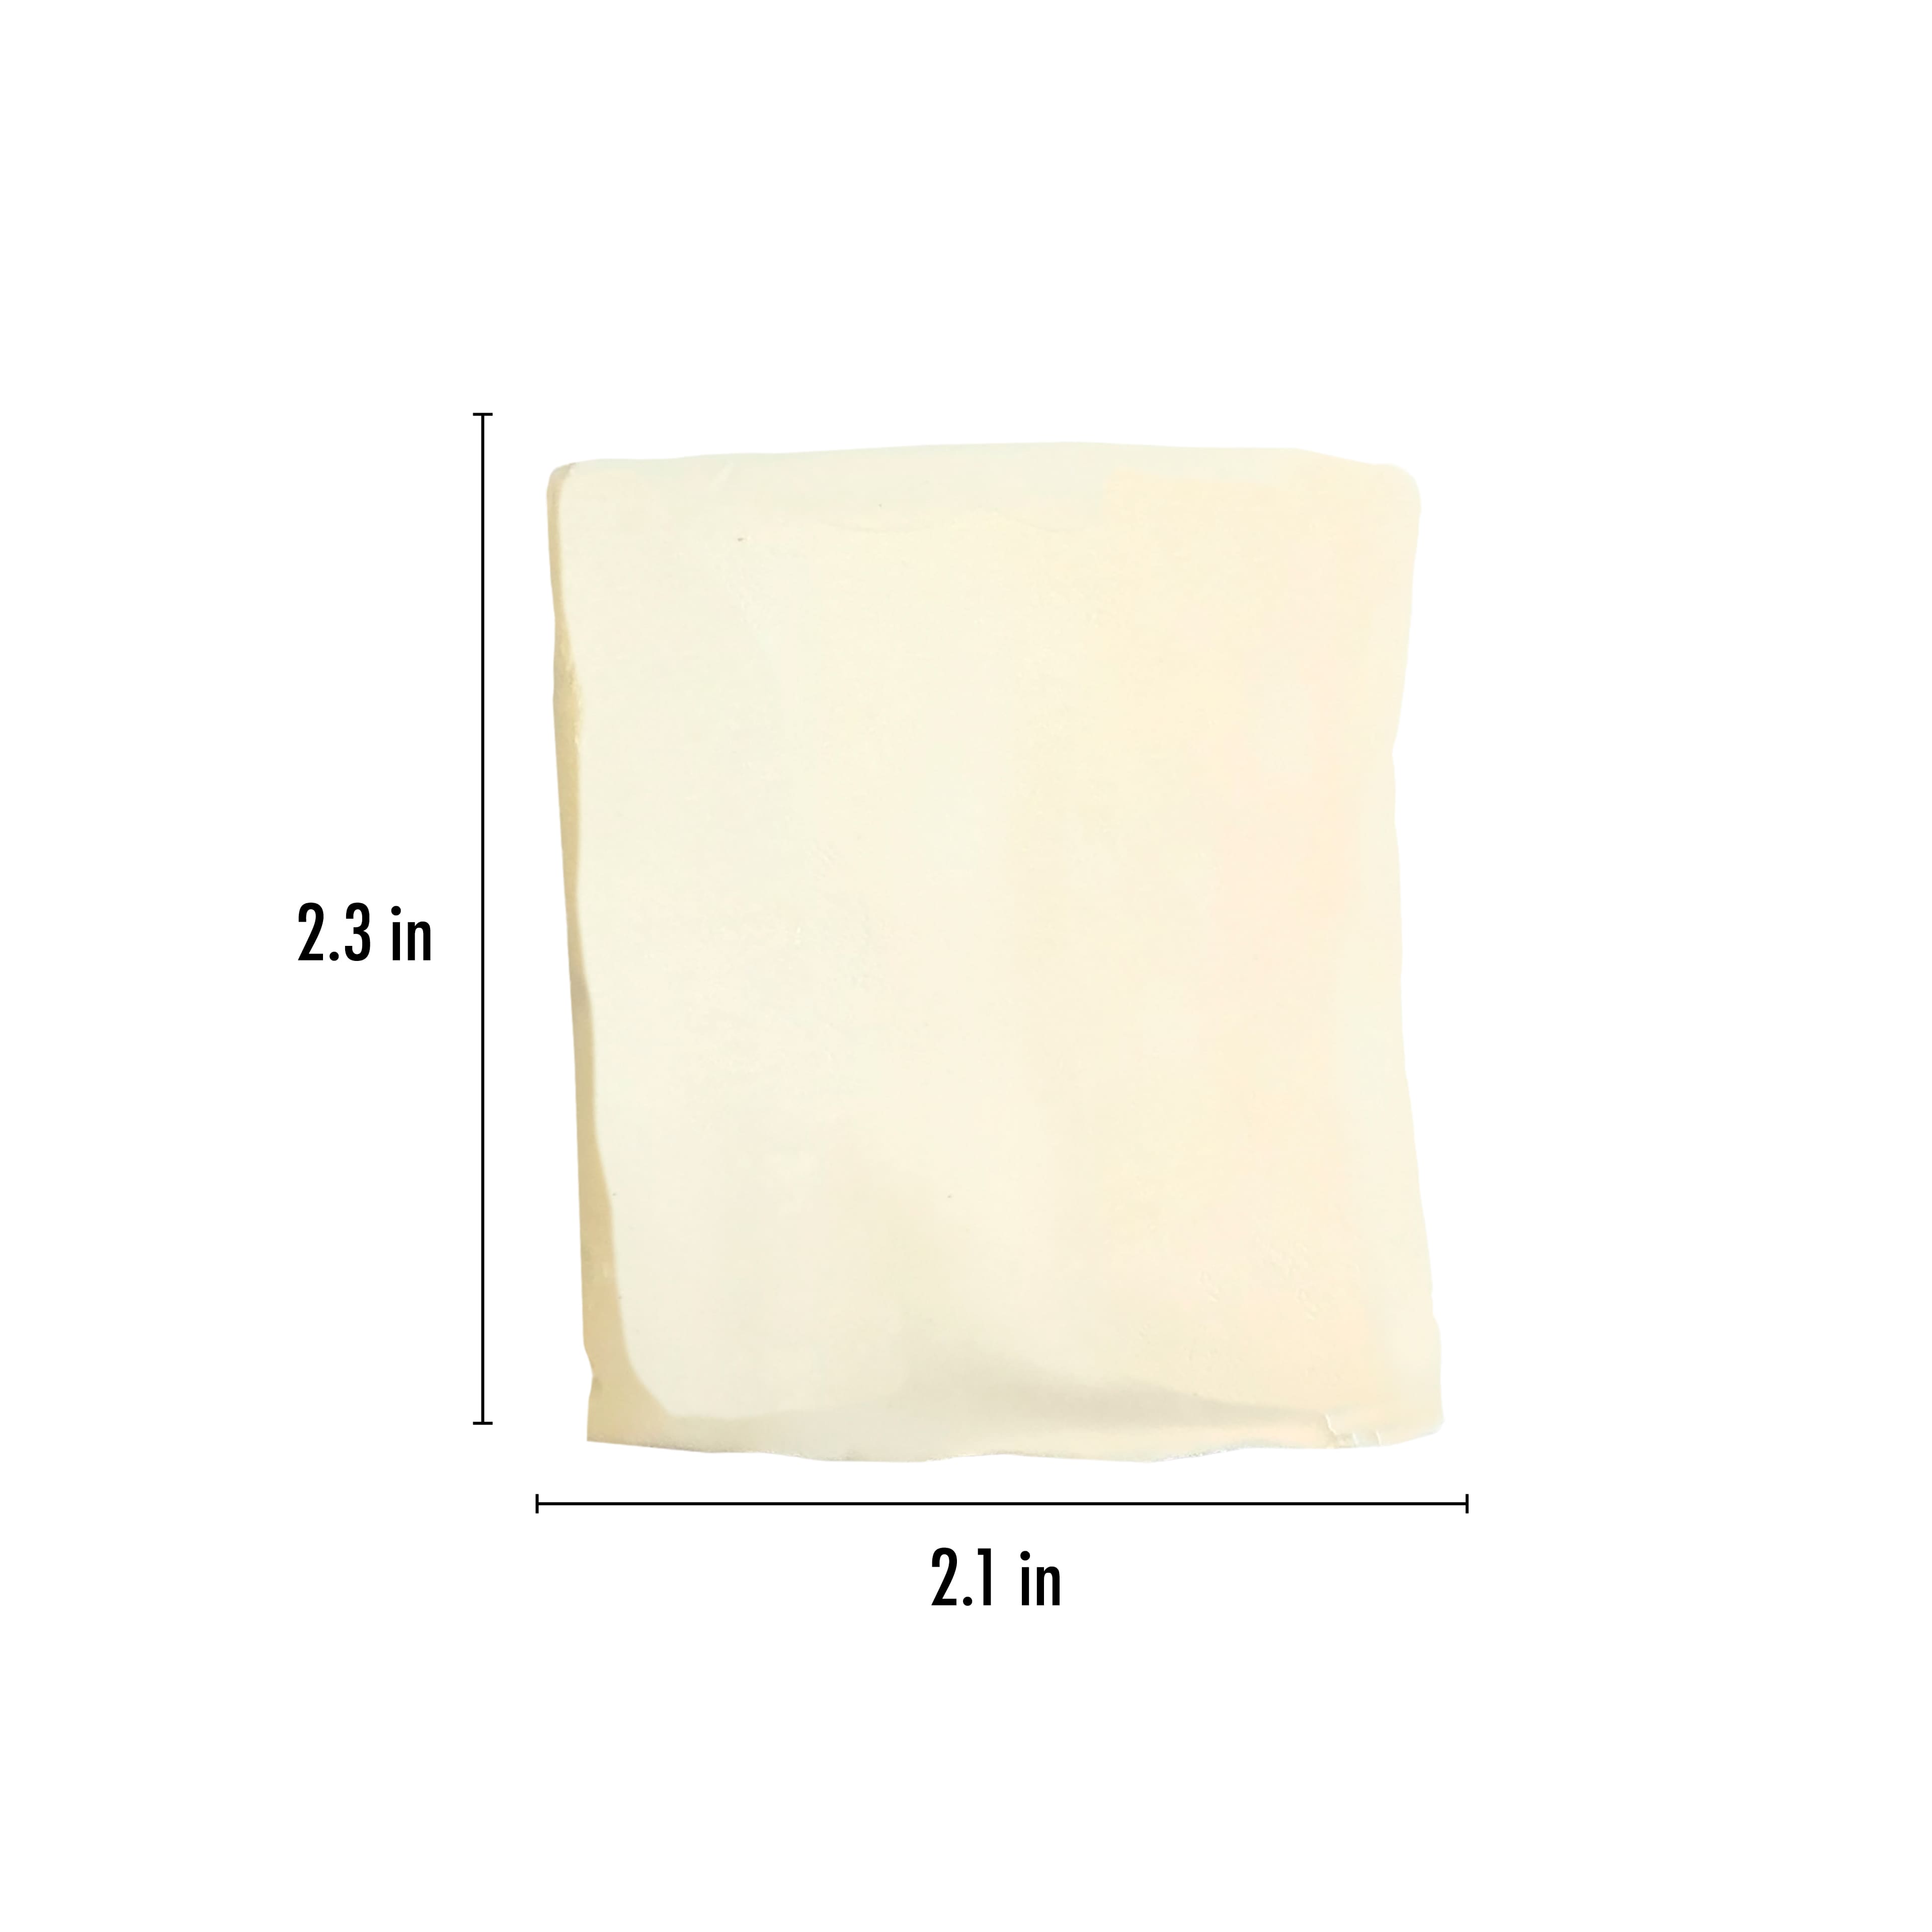 24 Pack: Cernit&#xAE; 2oz. Translucent Polymer Clay